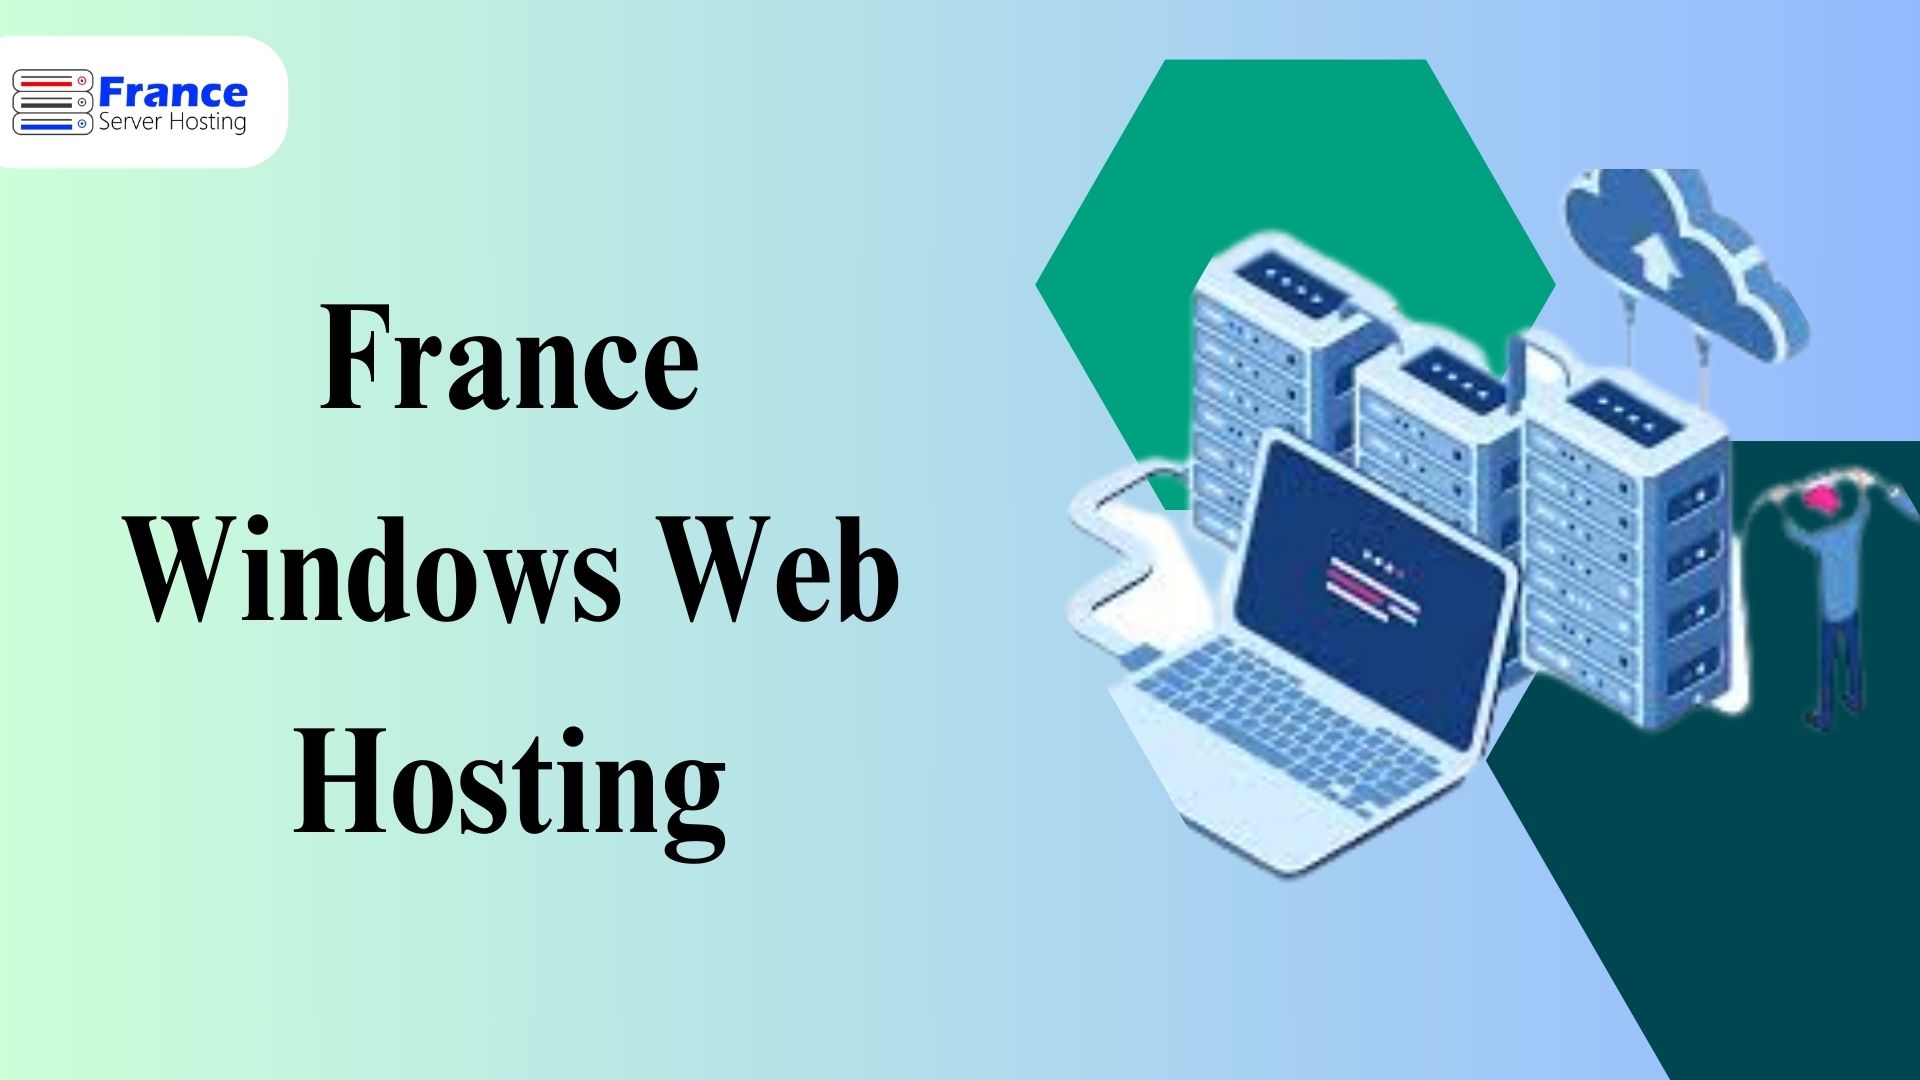 France Windows Web Hosting